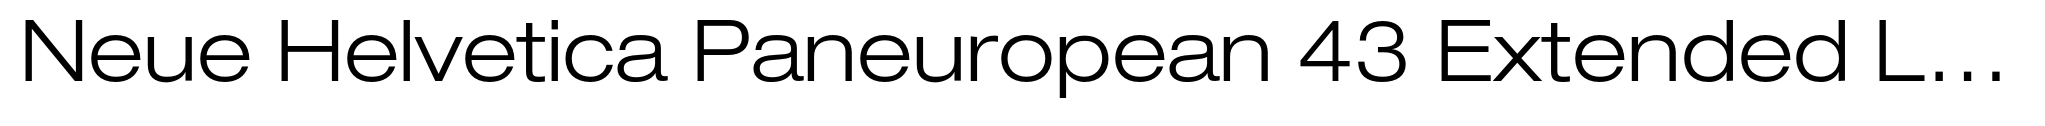 Neue Helvetica Paneuropean 43 Extended Light image